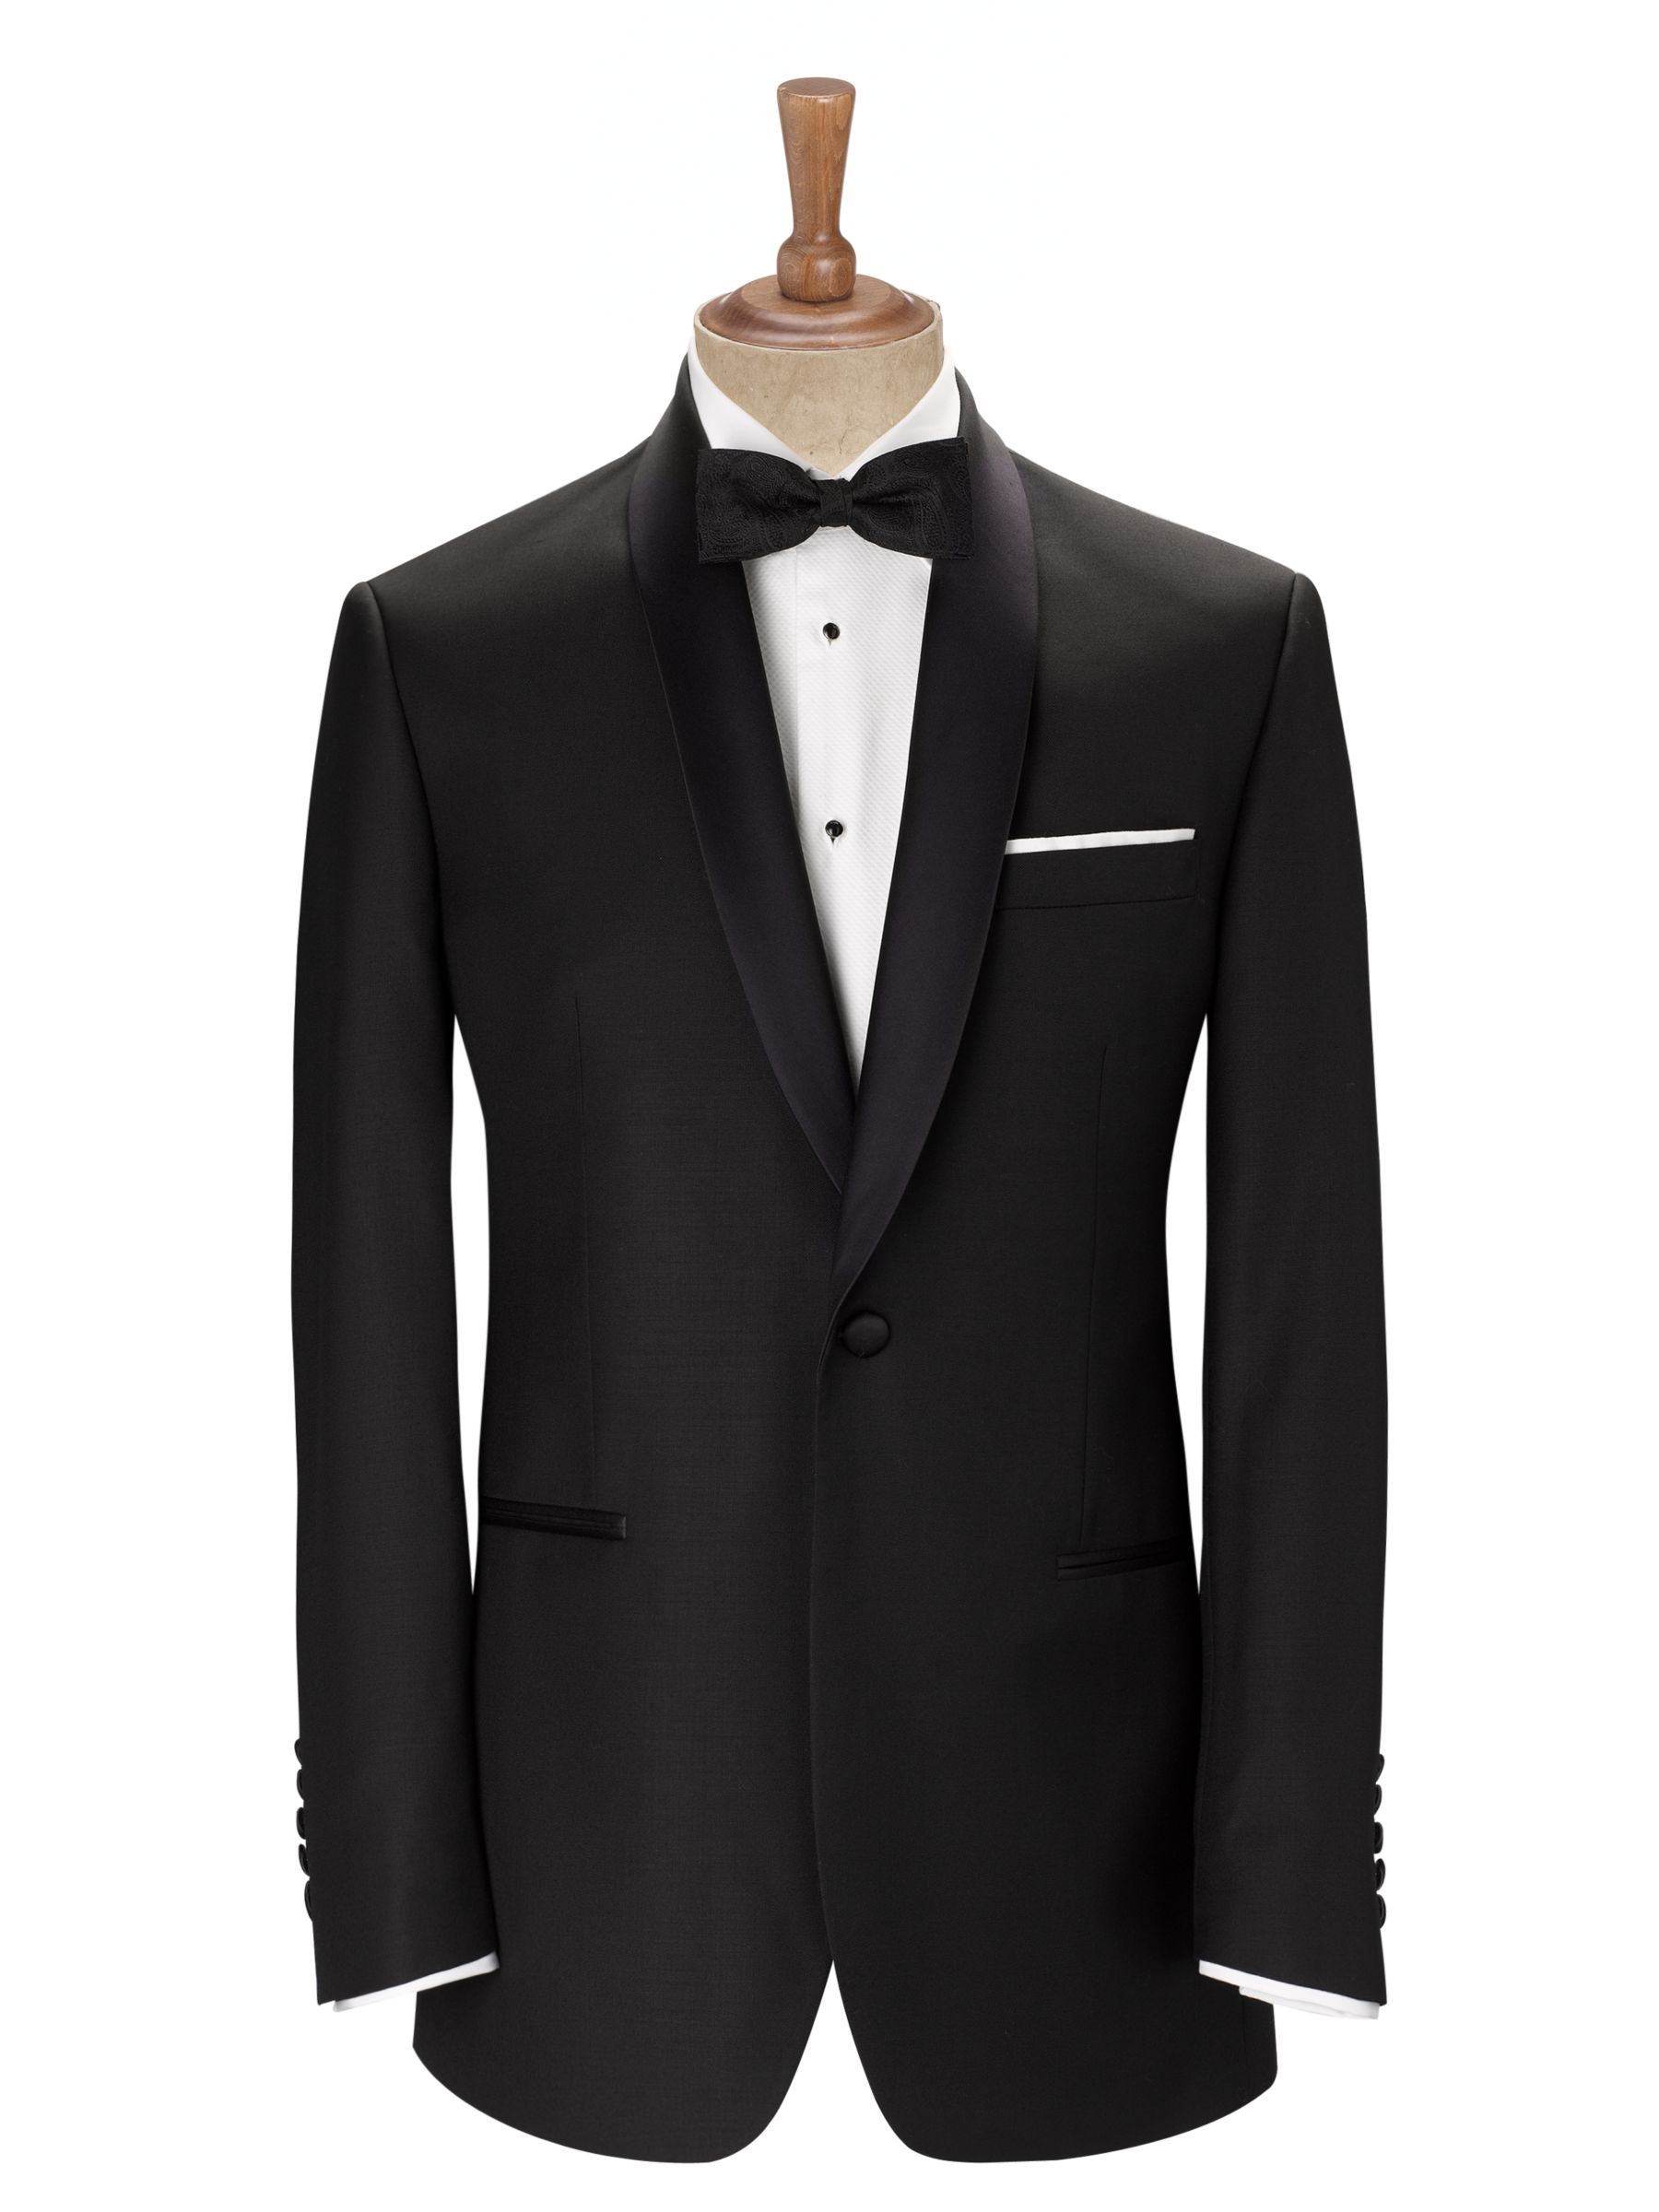 John Lewis & Partners Shawl Wool Regular Fit Dress Suit Jacket, Black